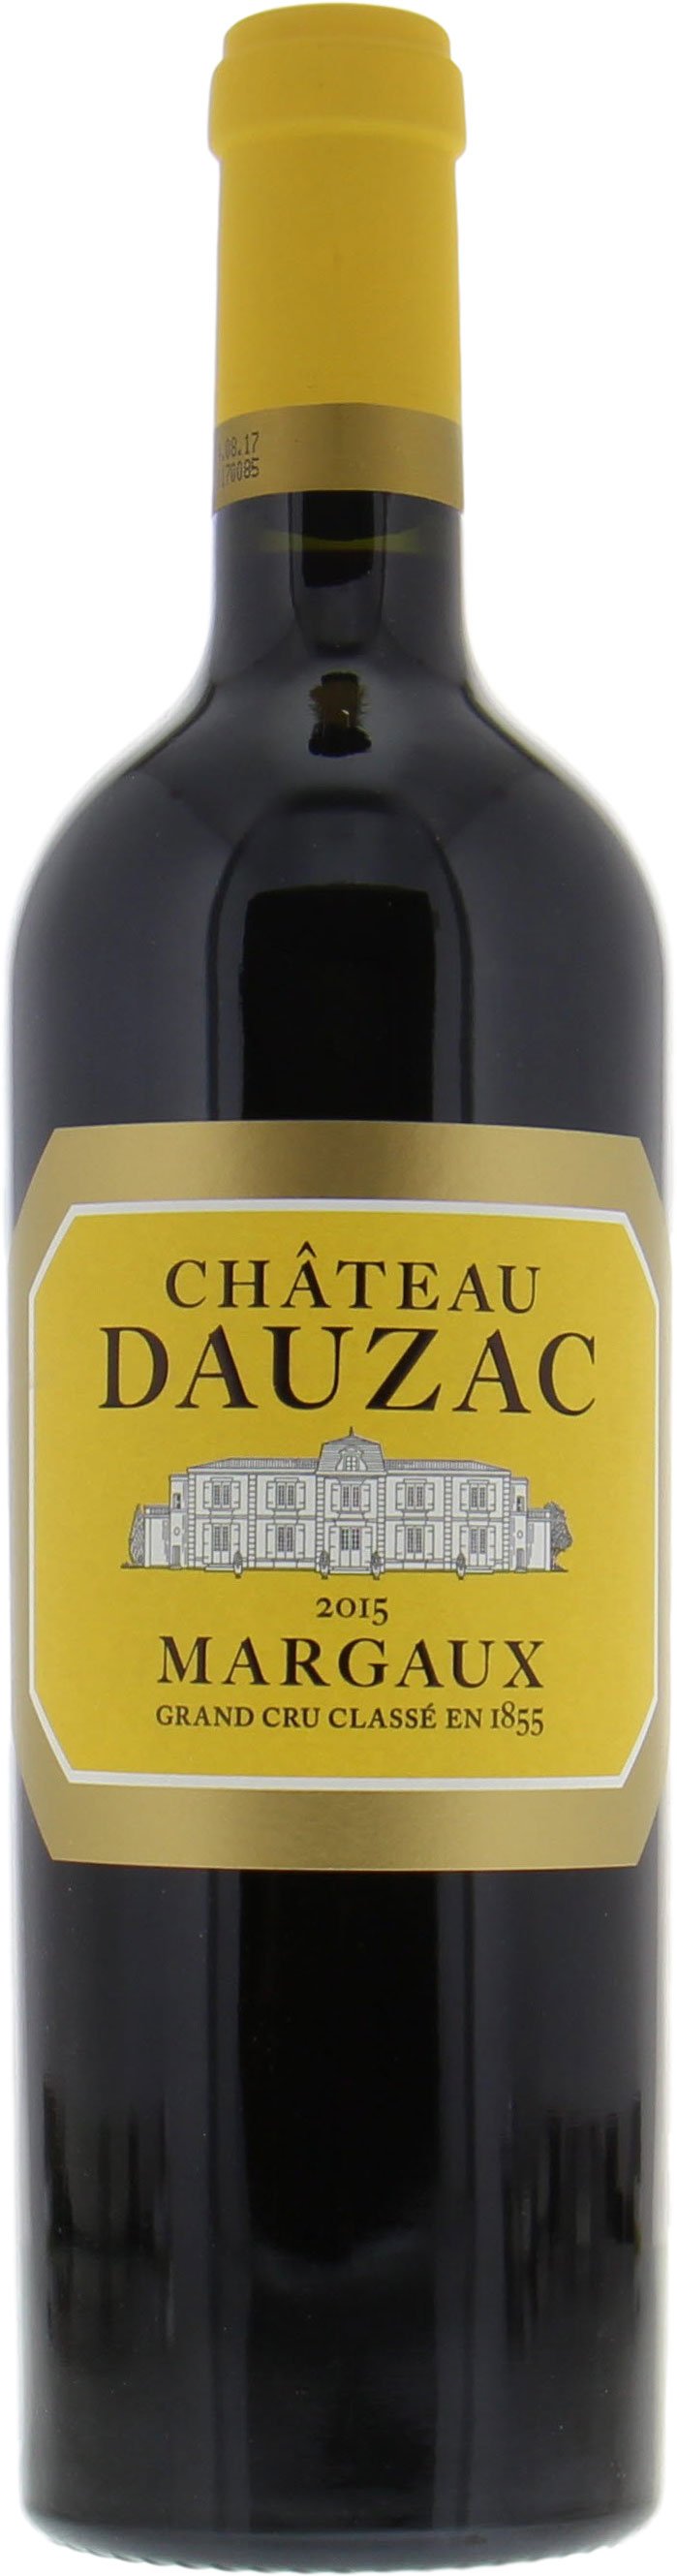 Chateau Dauzac - Chateau Dauzac 2015 From Original Wooden Case